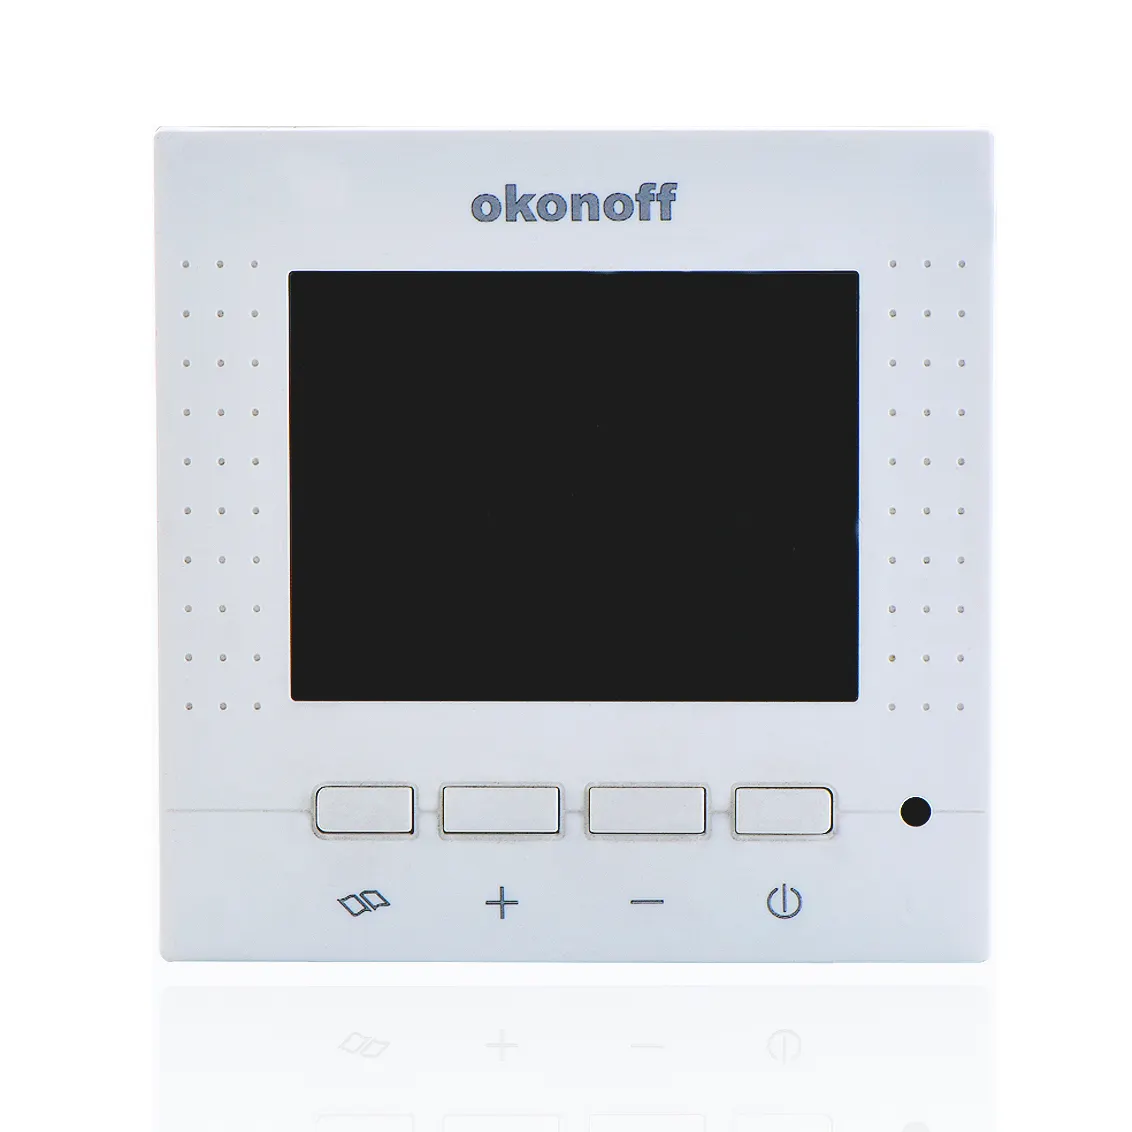 S430PW underfloor water heating digital programmable smart room thermostat